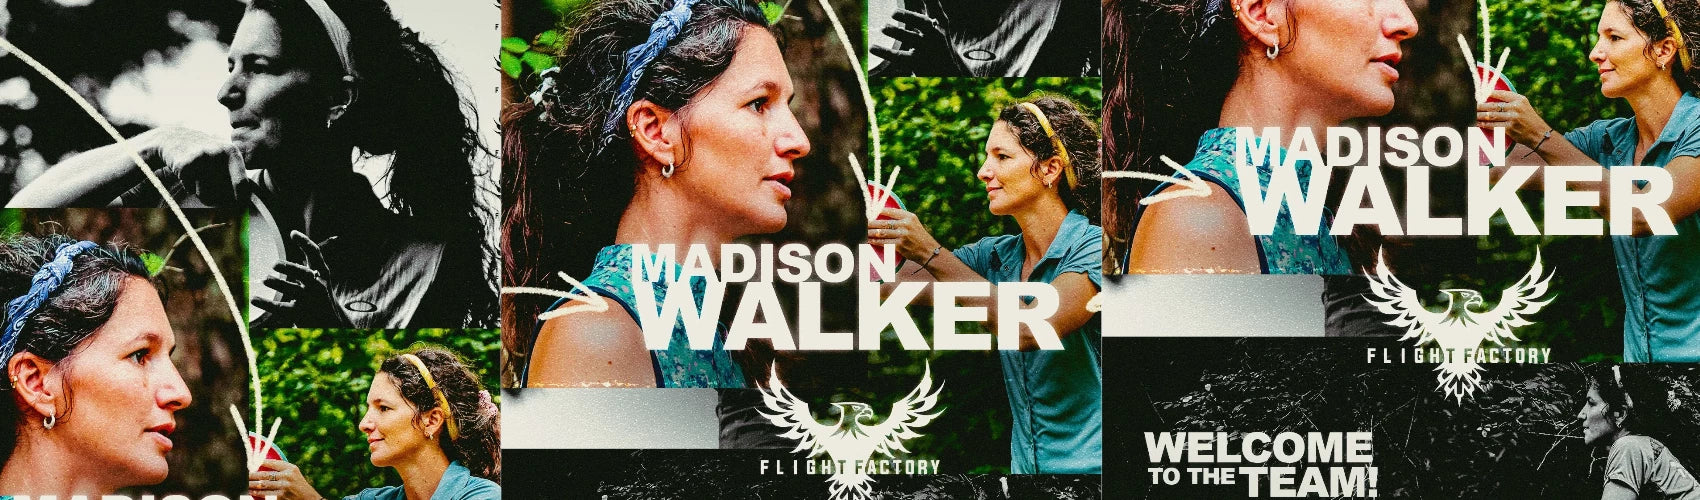 Madison Walker